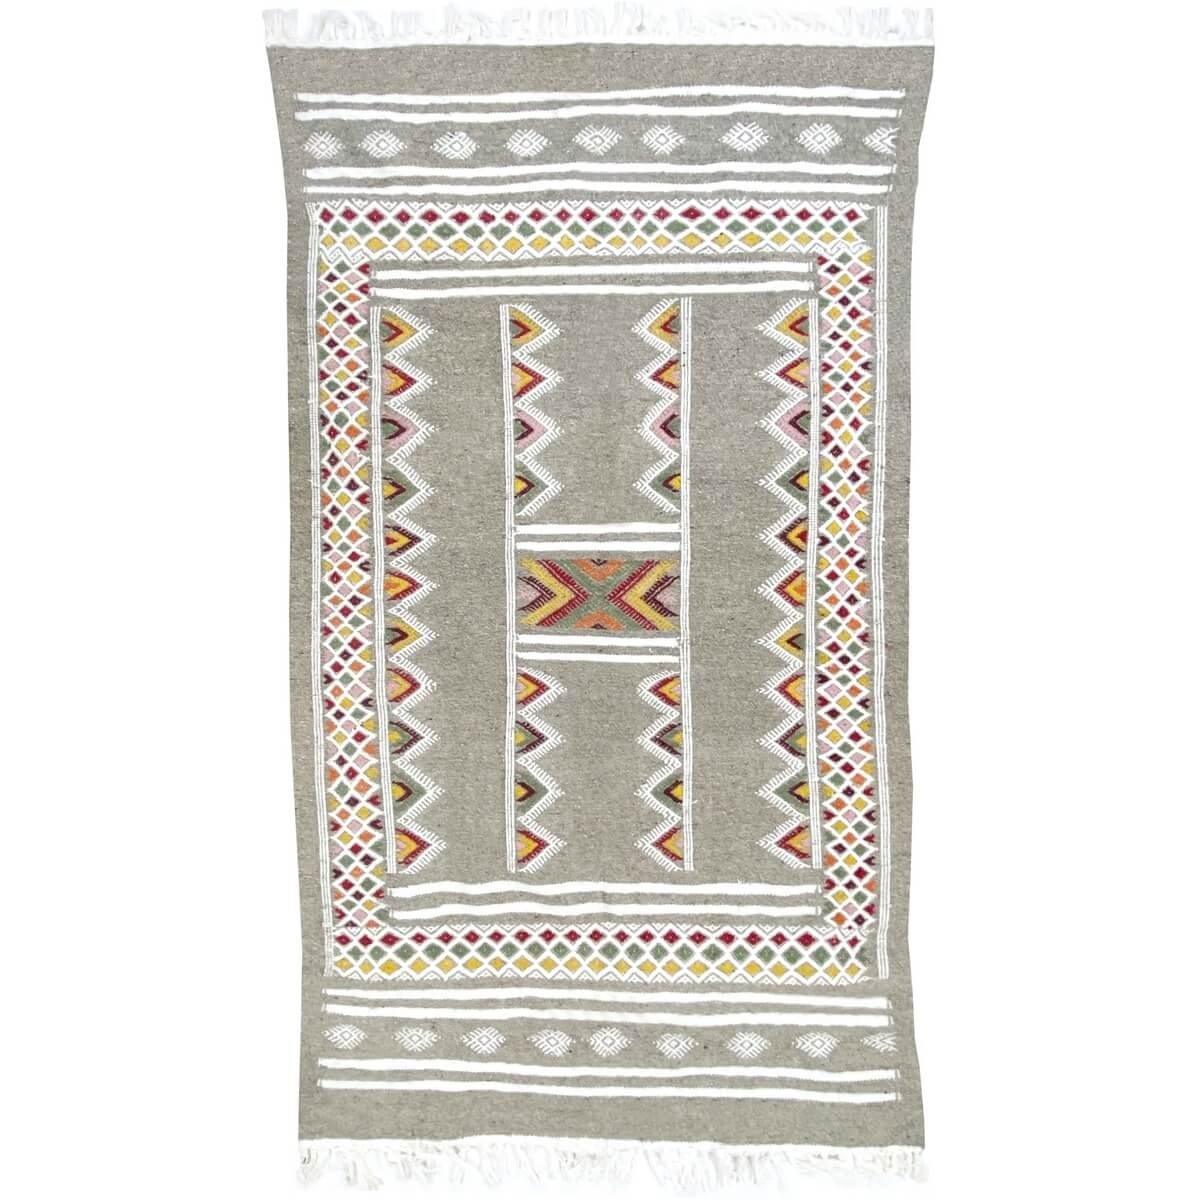 Berber tapijt Tapijt Kilim Alissa 110x190 Grijs/Veelkleurig (Handgeweven, Wol, Tunesië) Tunesisch kilimdeken, Marokkaanse stijl.